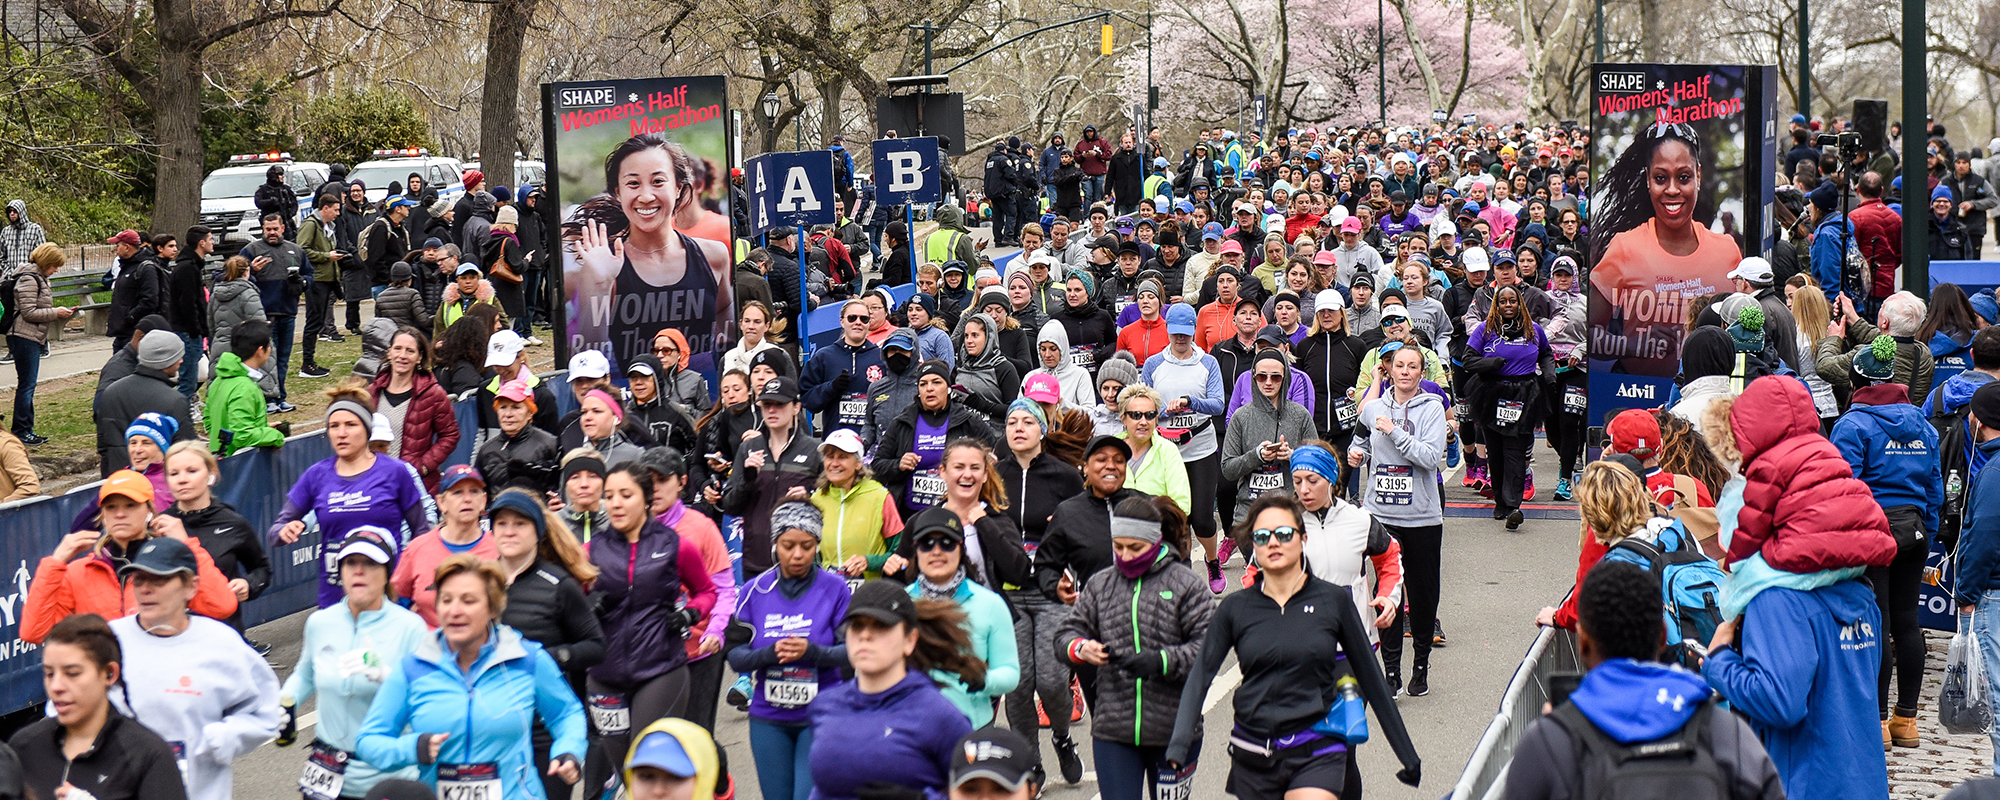 Image result for shape women's half marathon